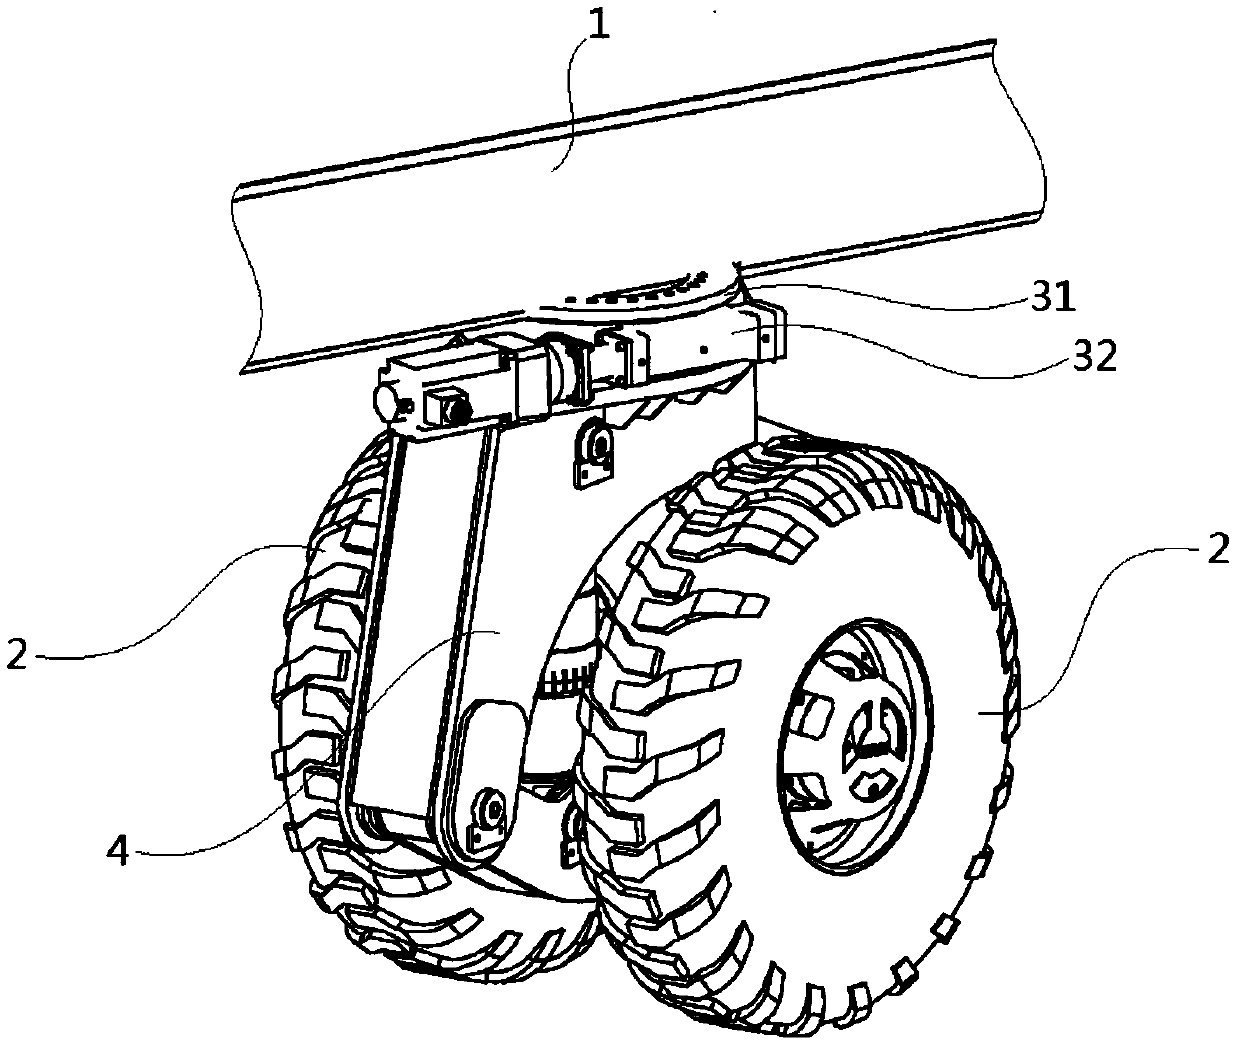 Steering system, vehicle and vehicle steering method